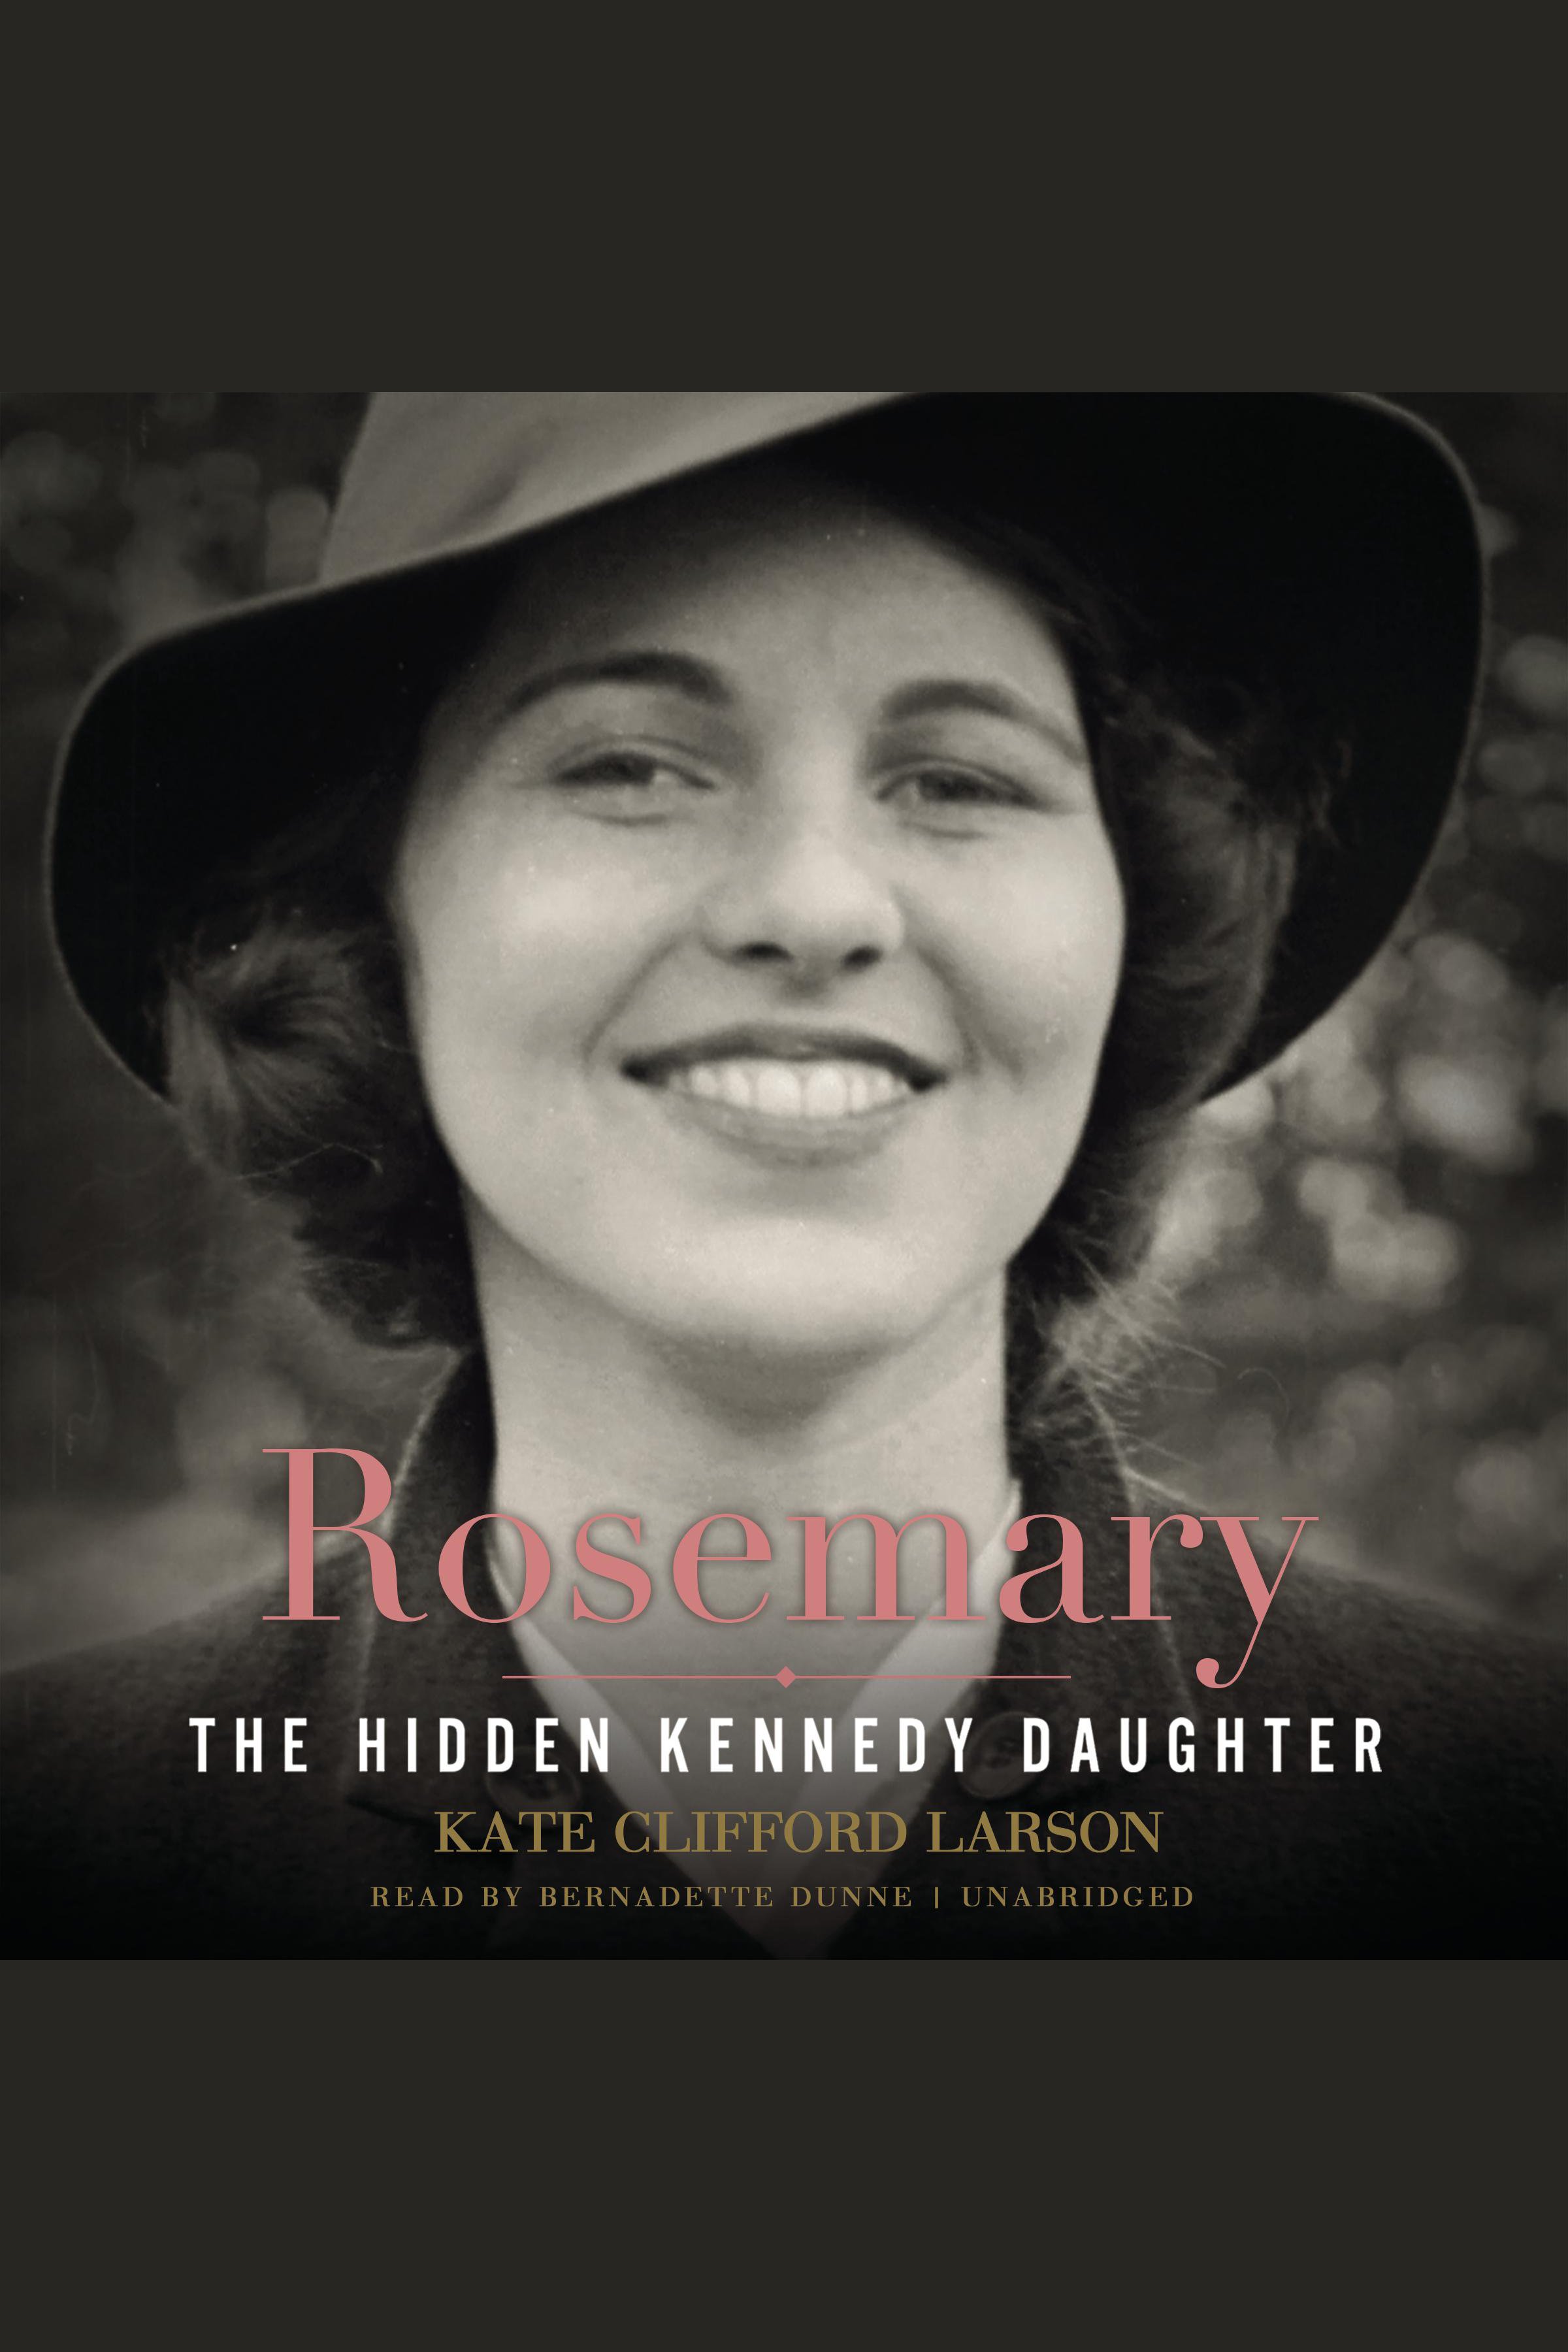 Rosemary the hidden Kennedy daughter